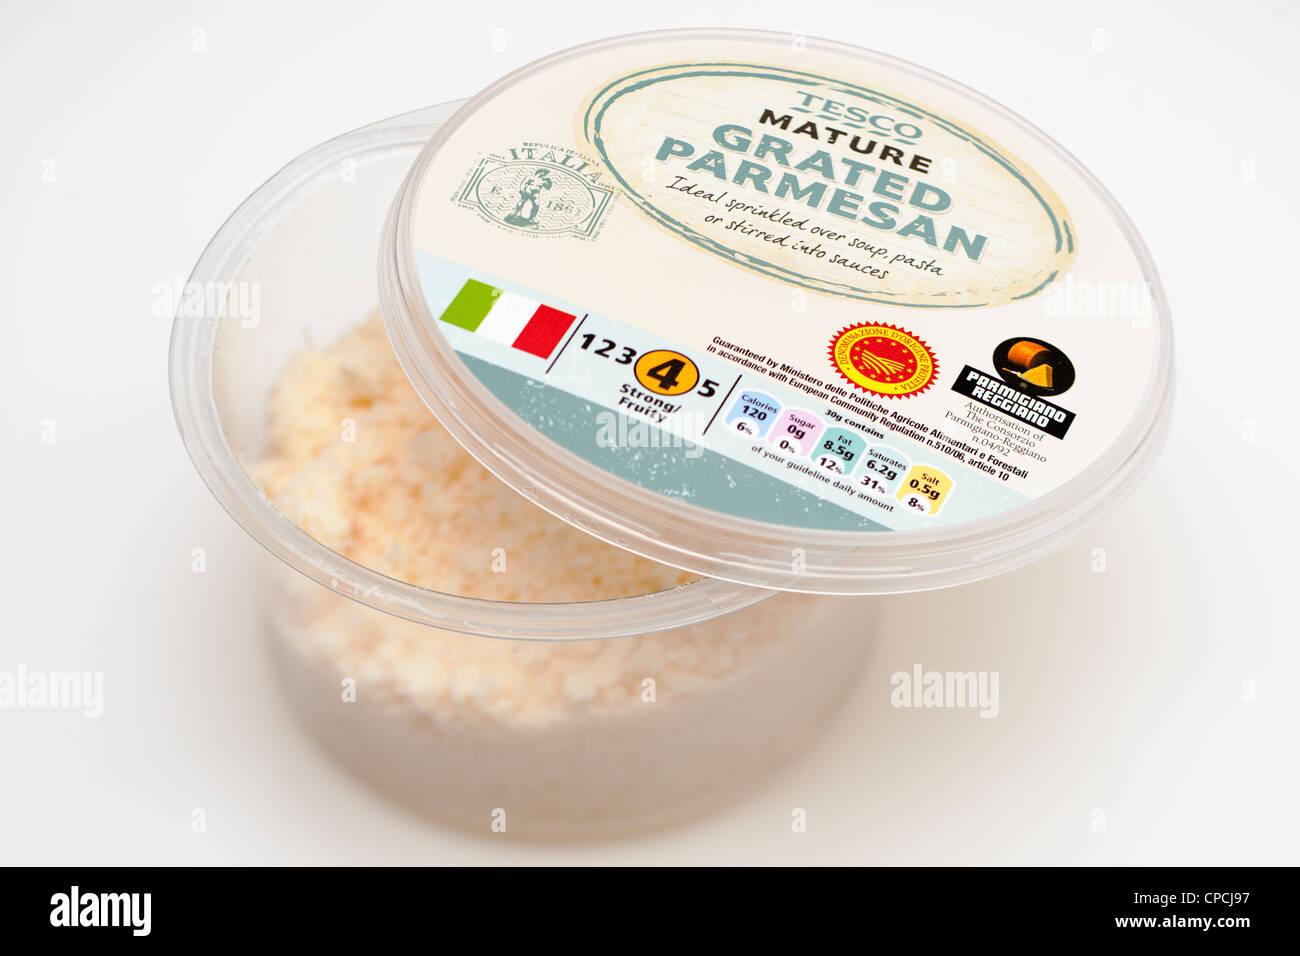 Carton of Tesco mature greated Parmesan cheese Stock Photo